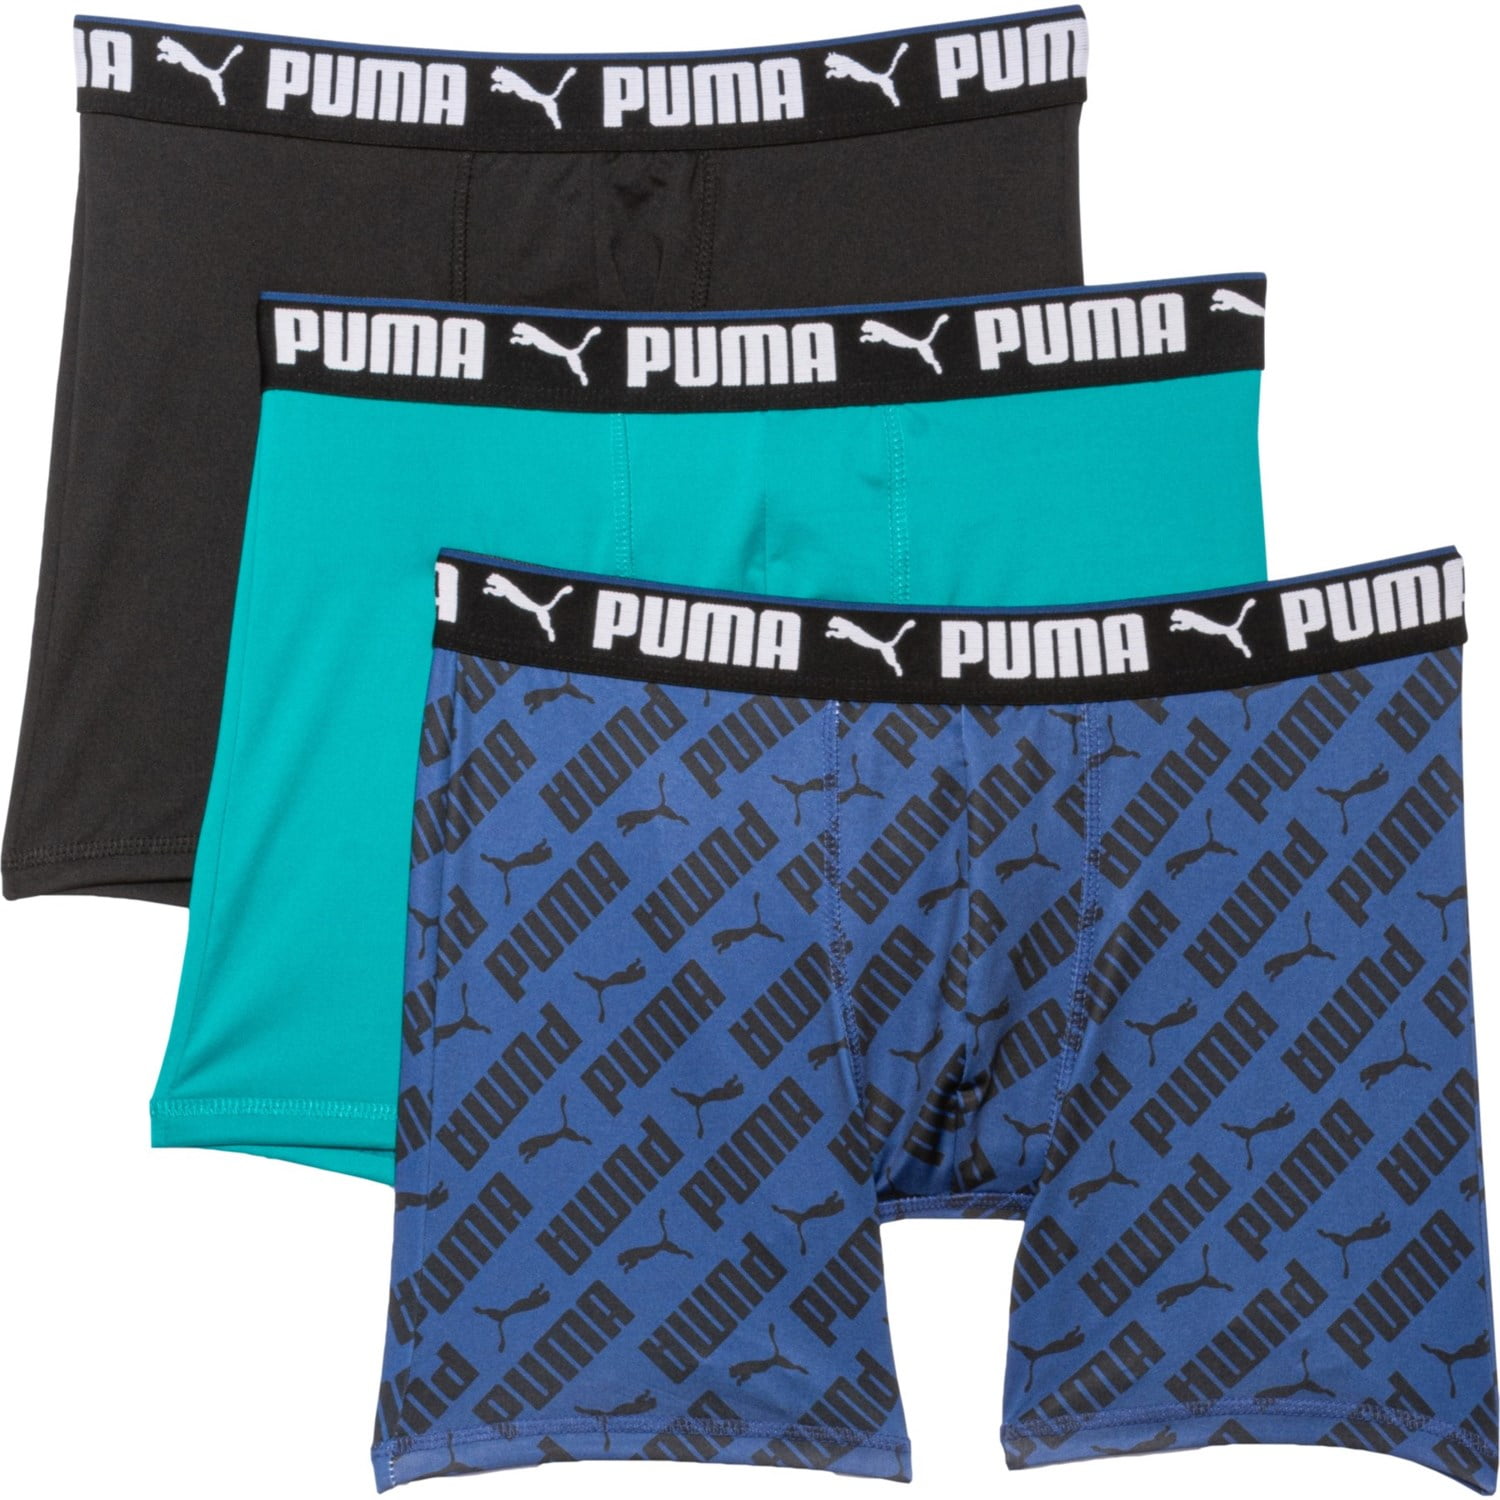 PUMA MEN'S 3 PACK - PHG BLUE LETTER XLARGE - BOXER BRIEF UNDERWEAR  PERFORMANCE 